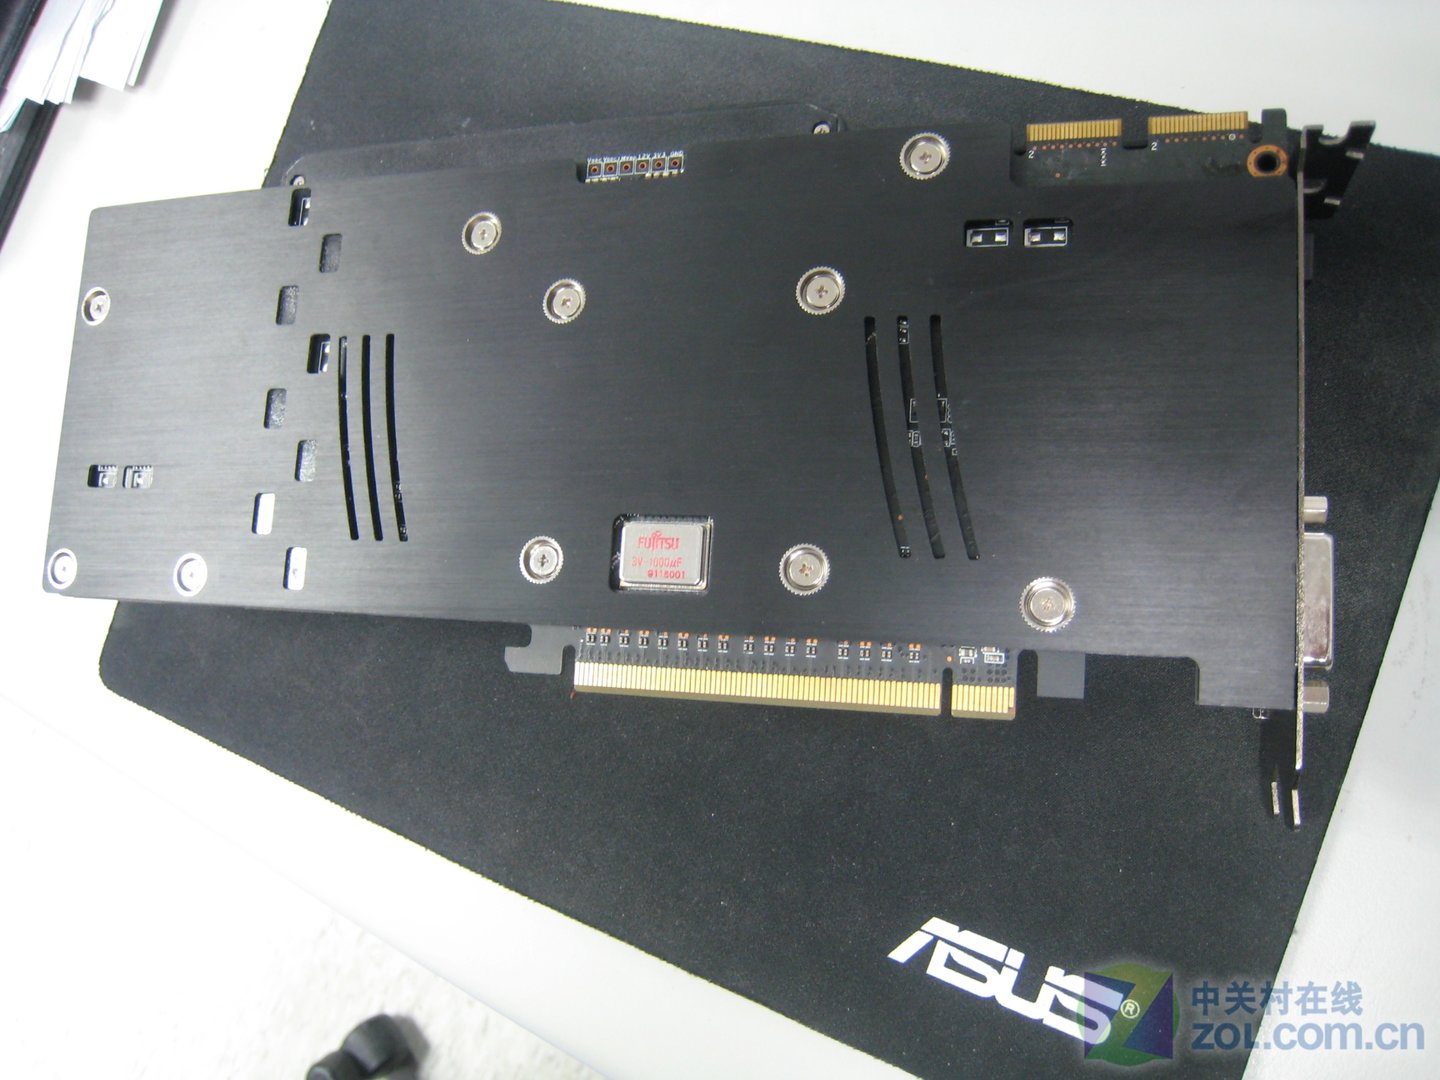 Asus ROG Radeon HD 5870 Matrix